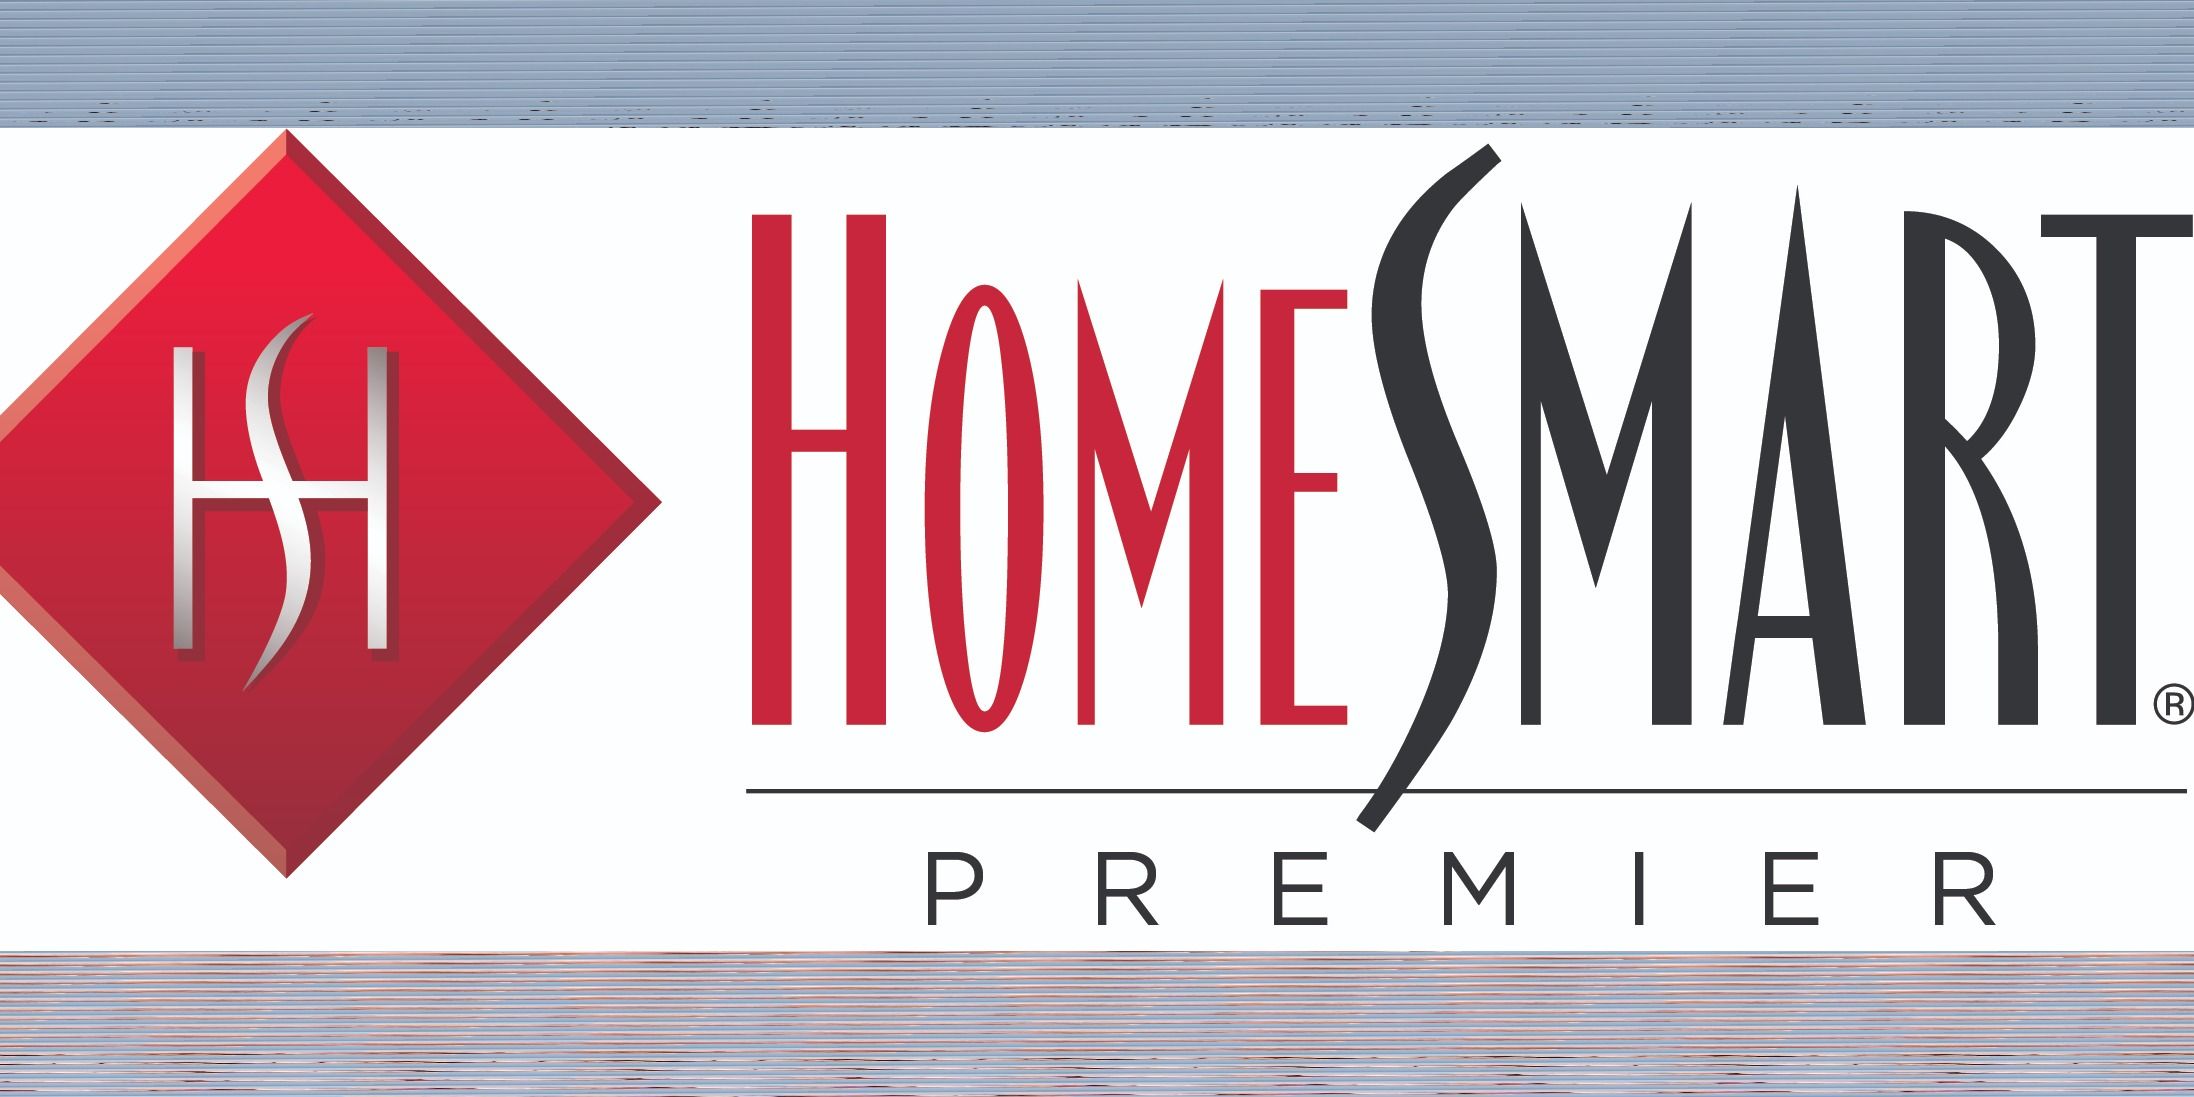  HomeSmart Premier